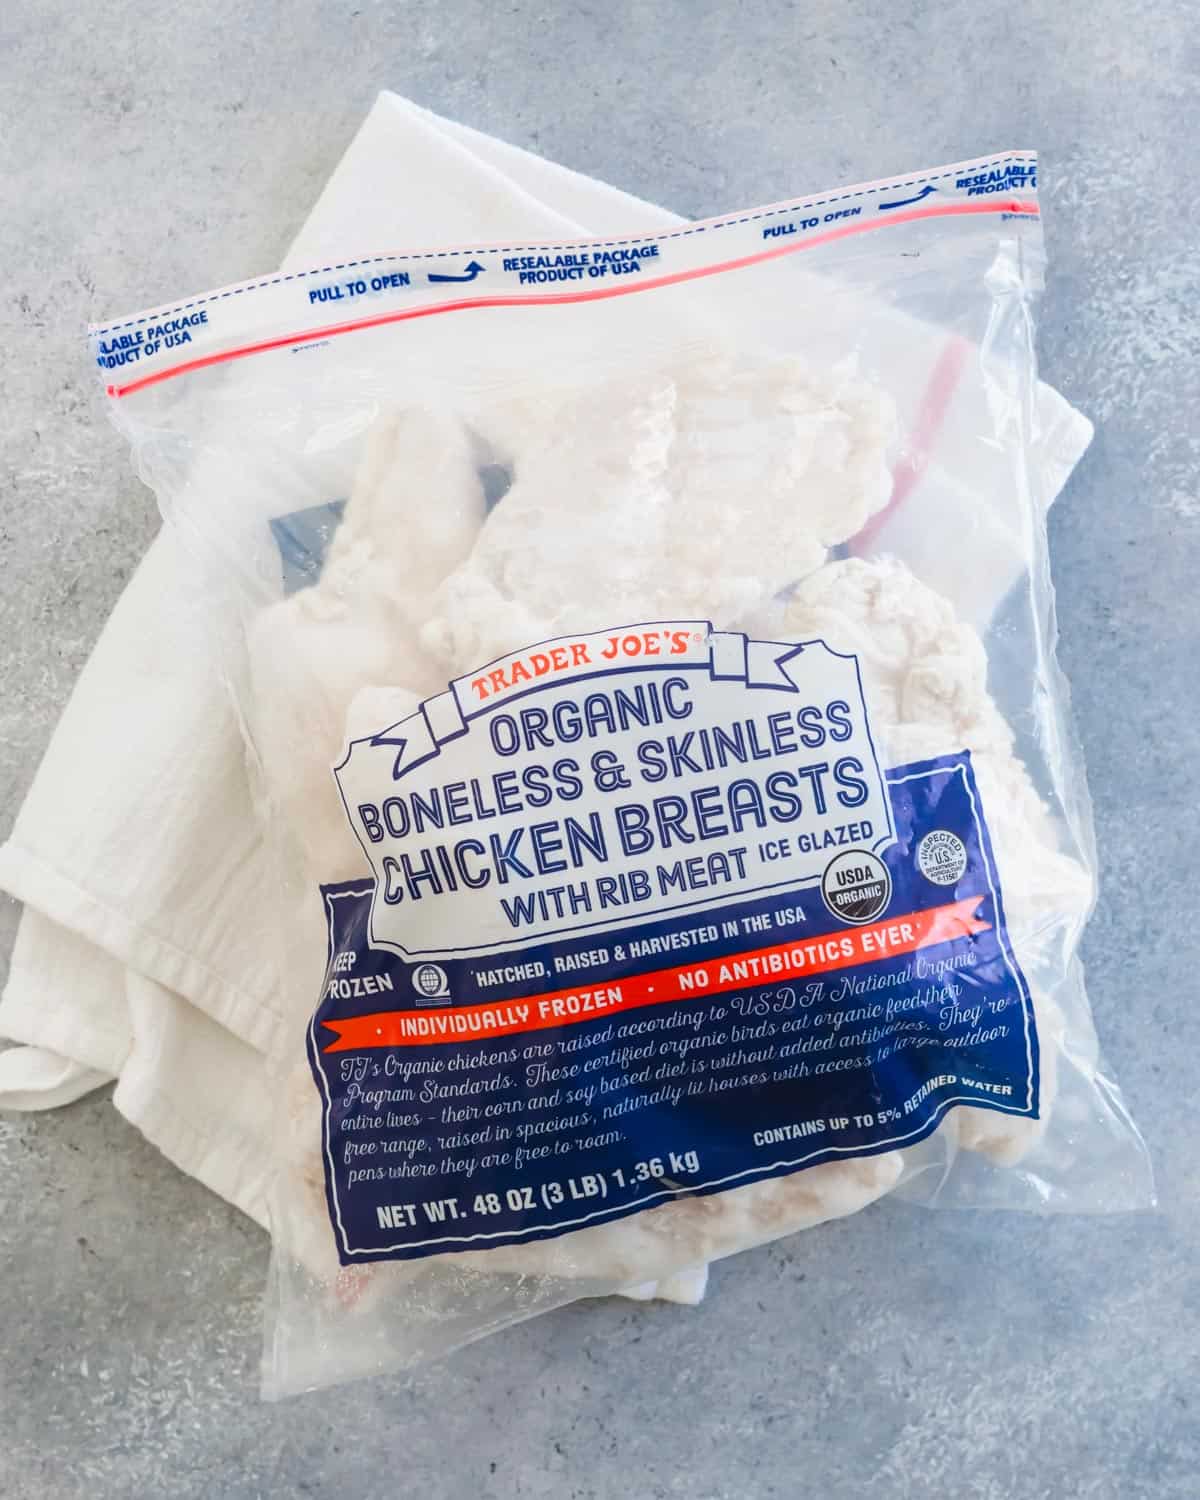 Package of organic frozen chicken breasts.